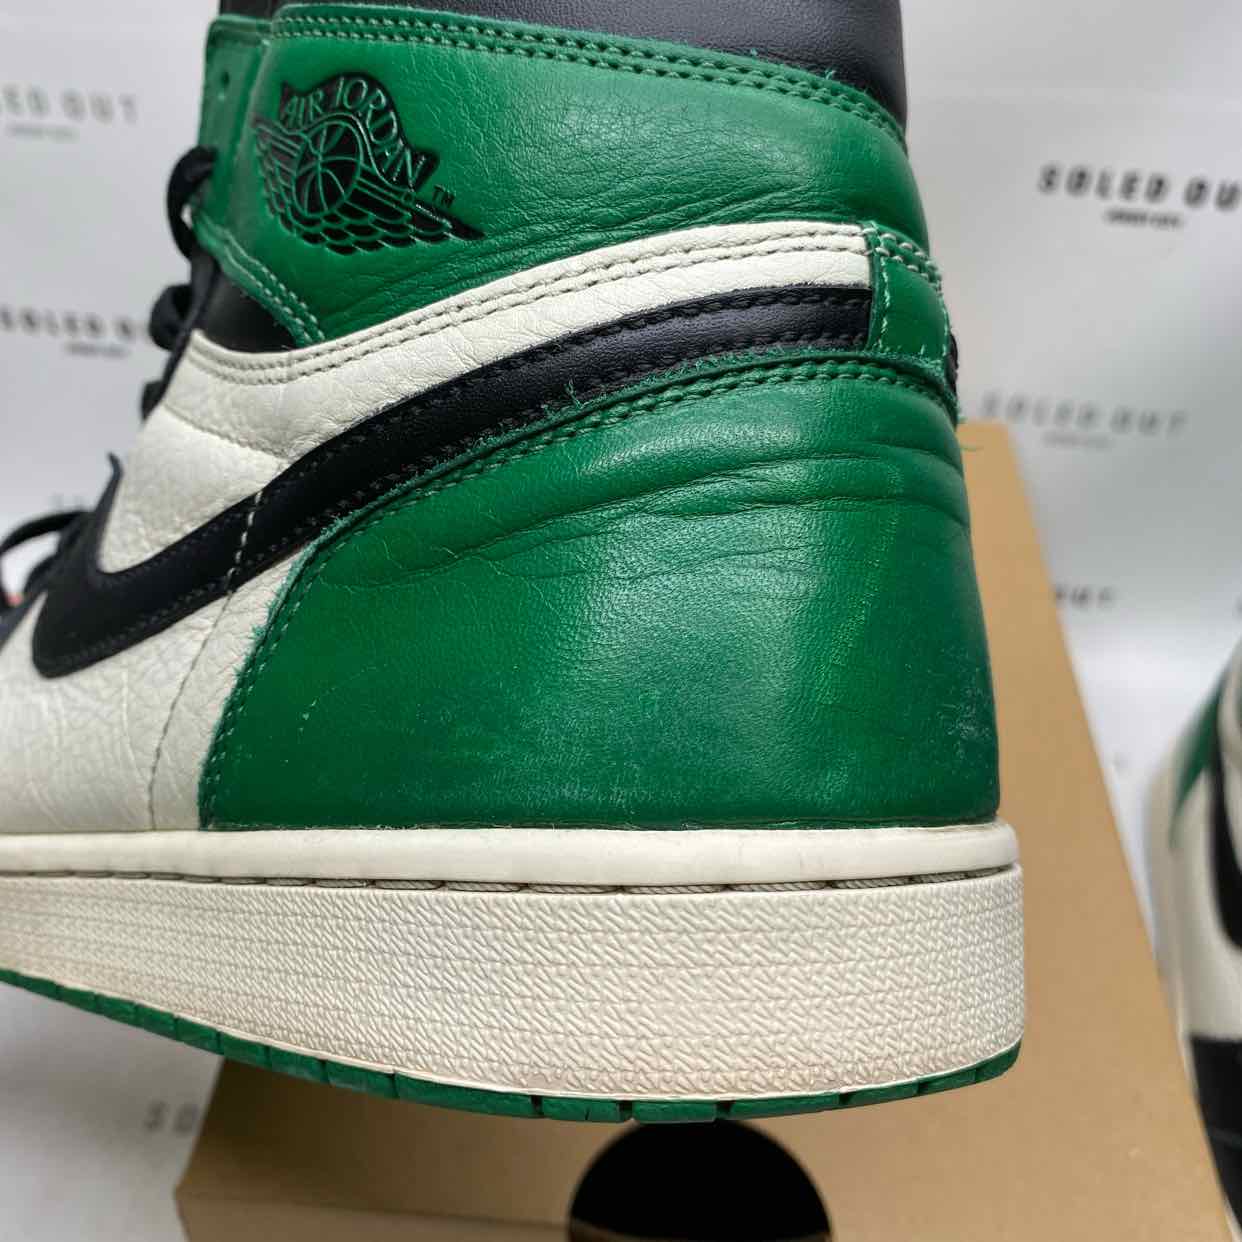 Air Jordan 1 Retro High OG "Pine Green" 2018 Used Size 13